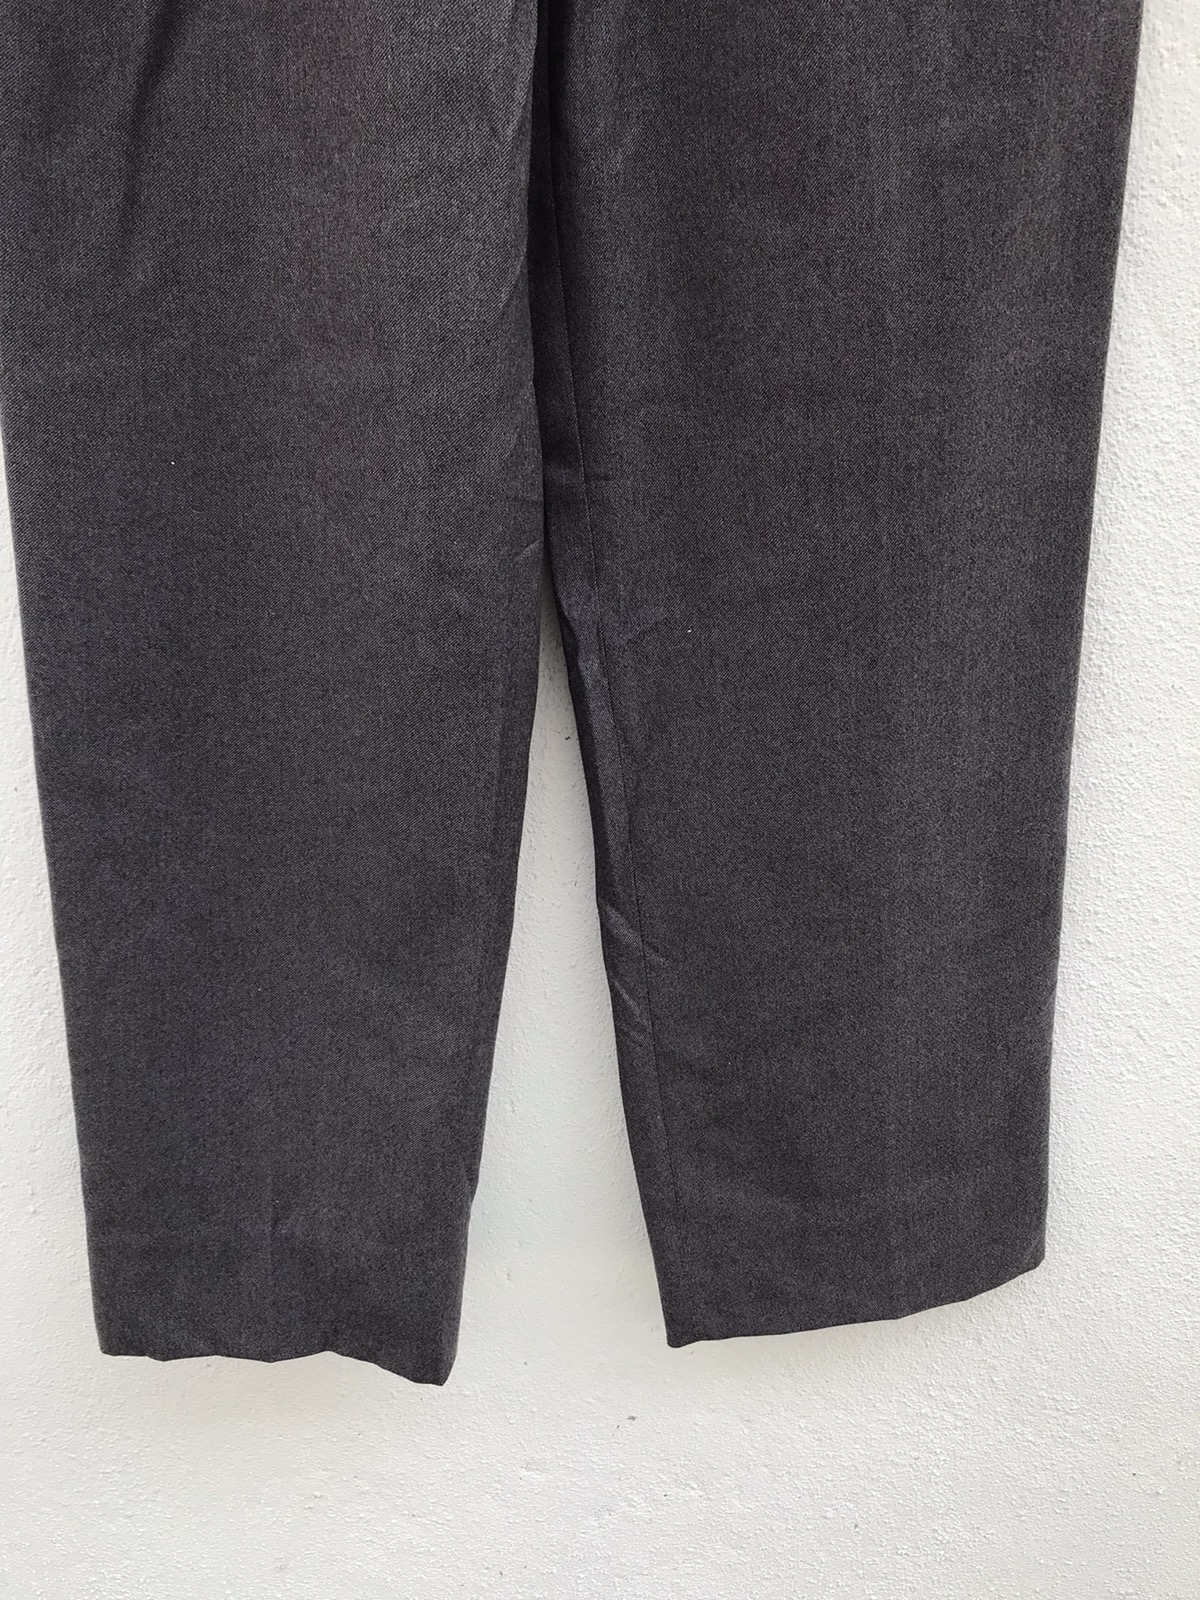 Made in Japan JUN Wool Trousers - 4